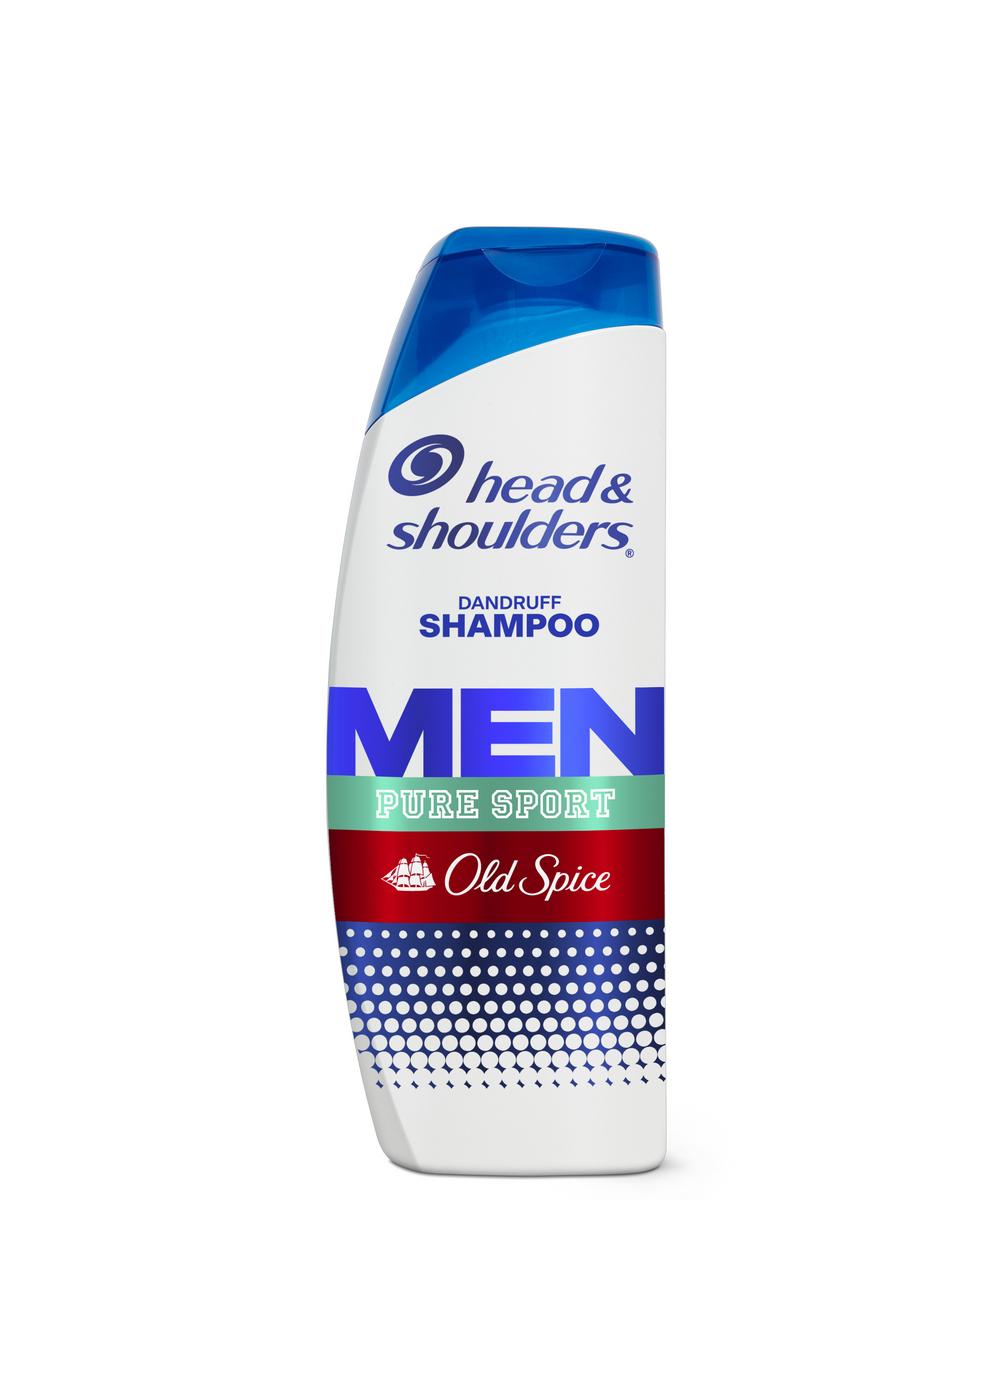 Head & Shoulders Old Spice Men Dandruff Shampoo - Pure Sport; image 4 of 11